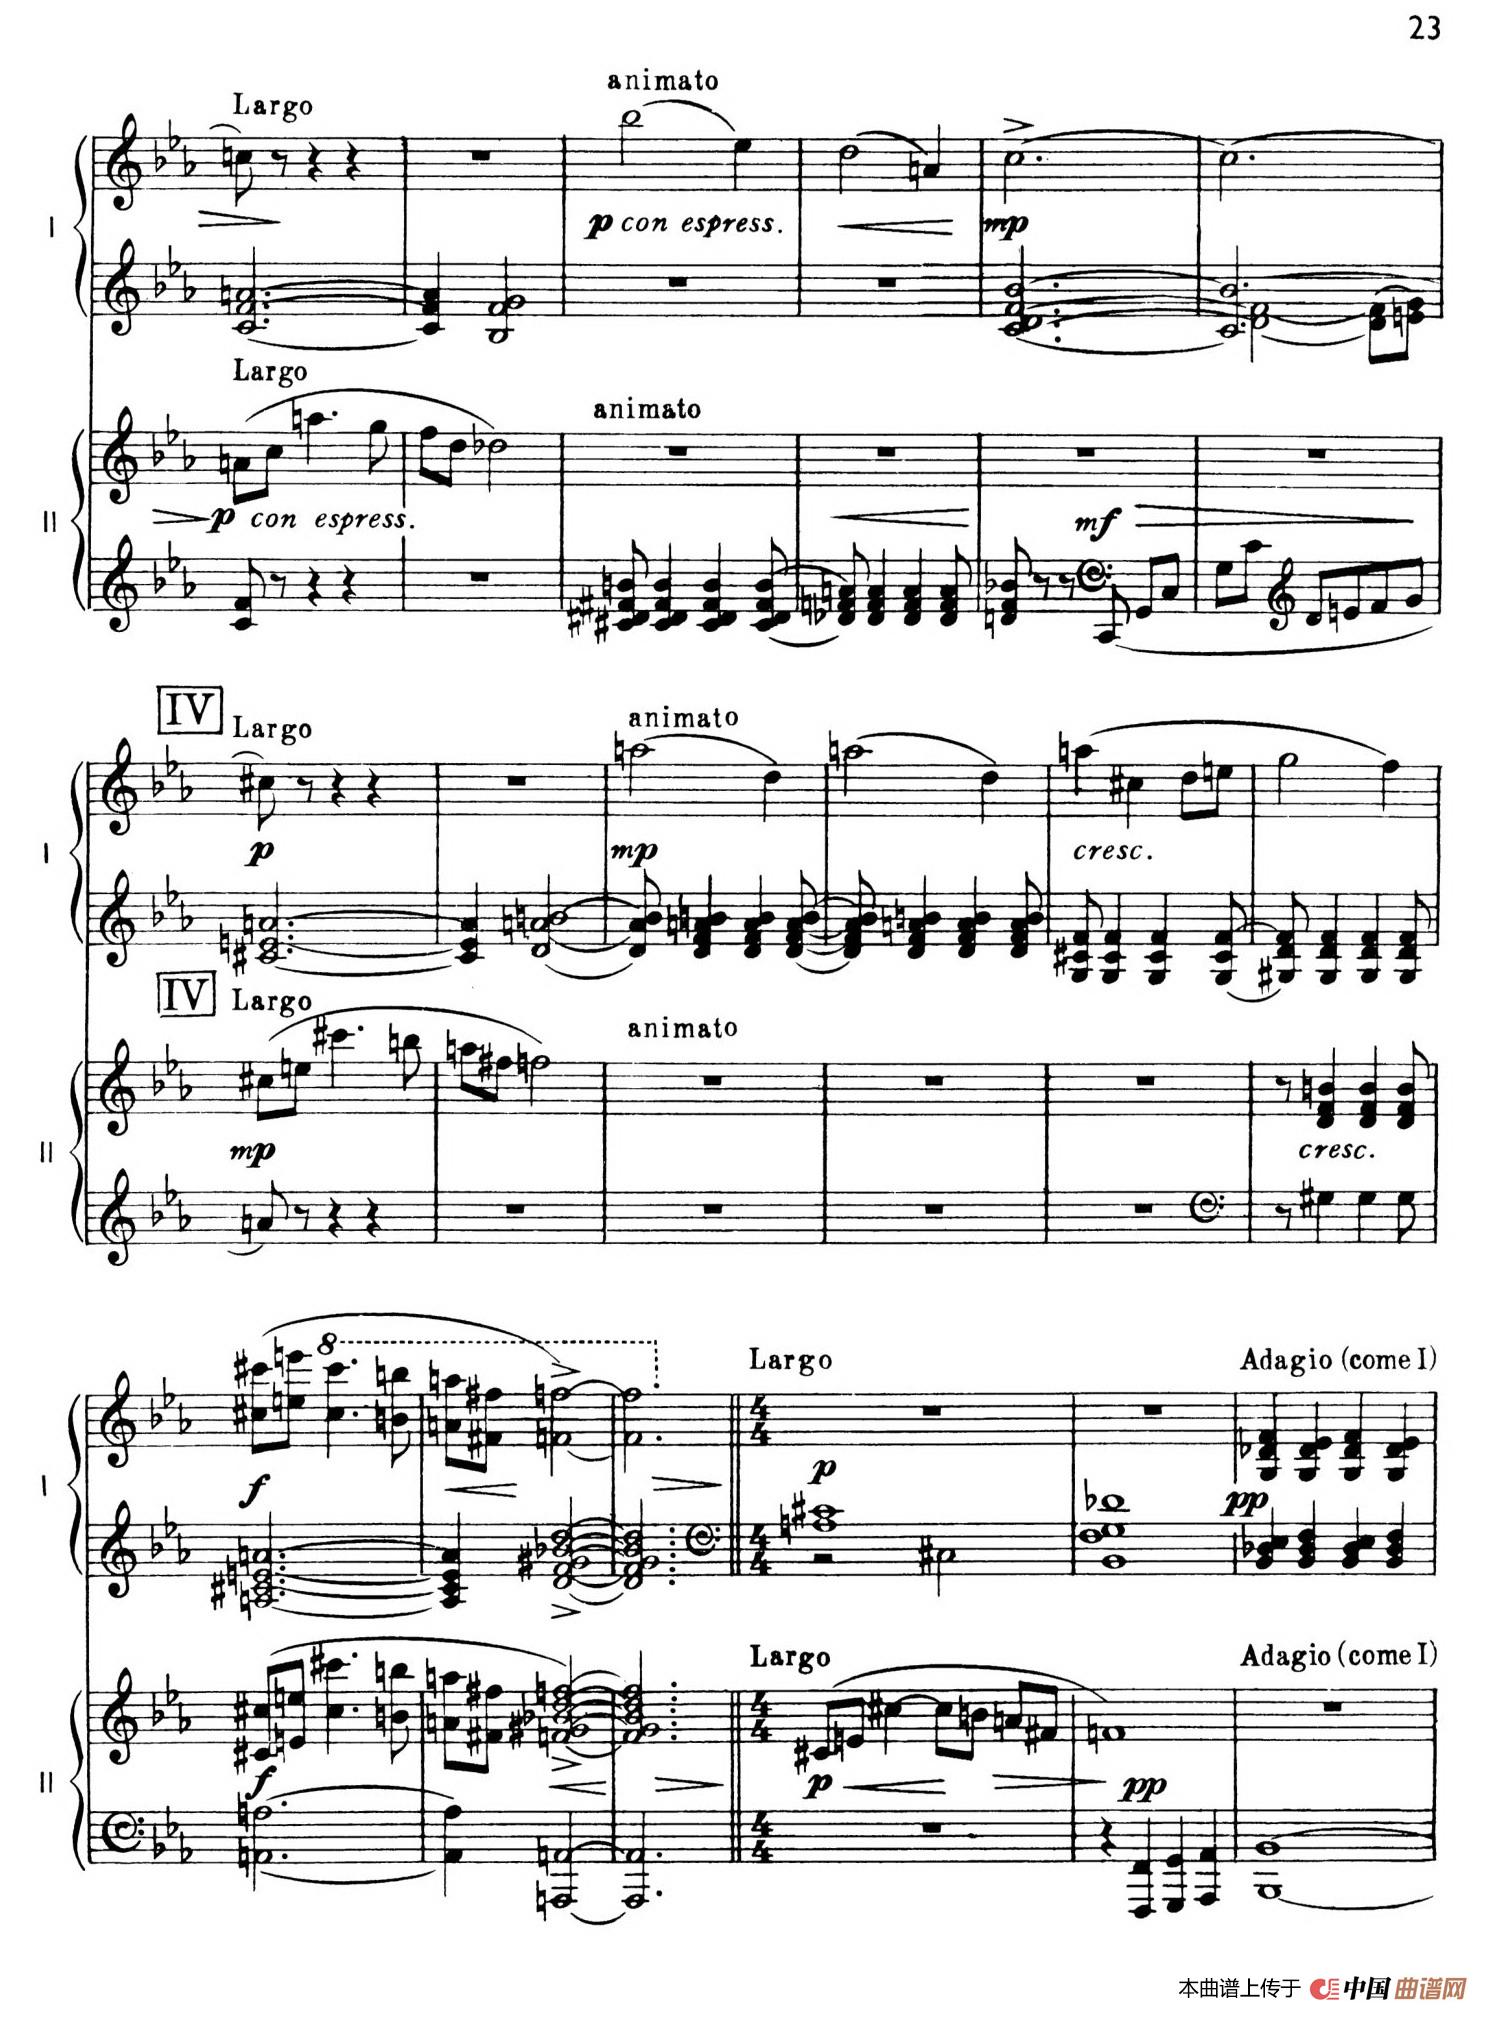 《The Planets Op.32》钢琴曲谱图分享